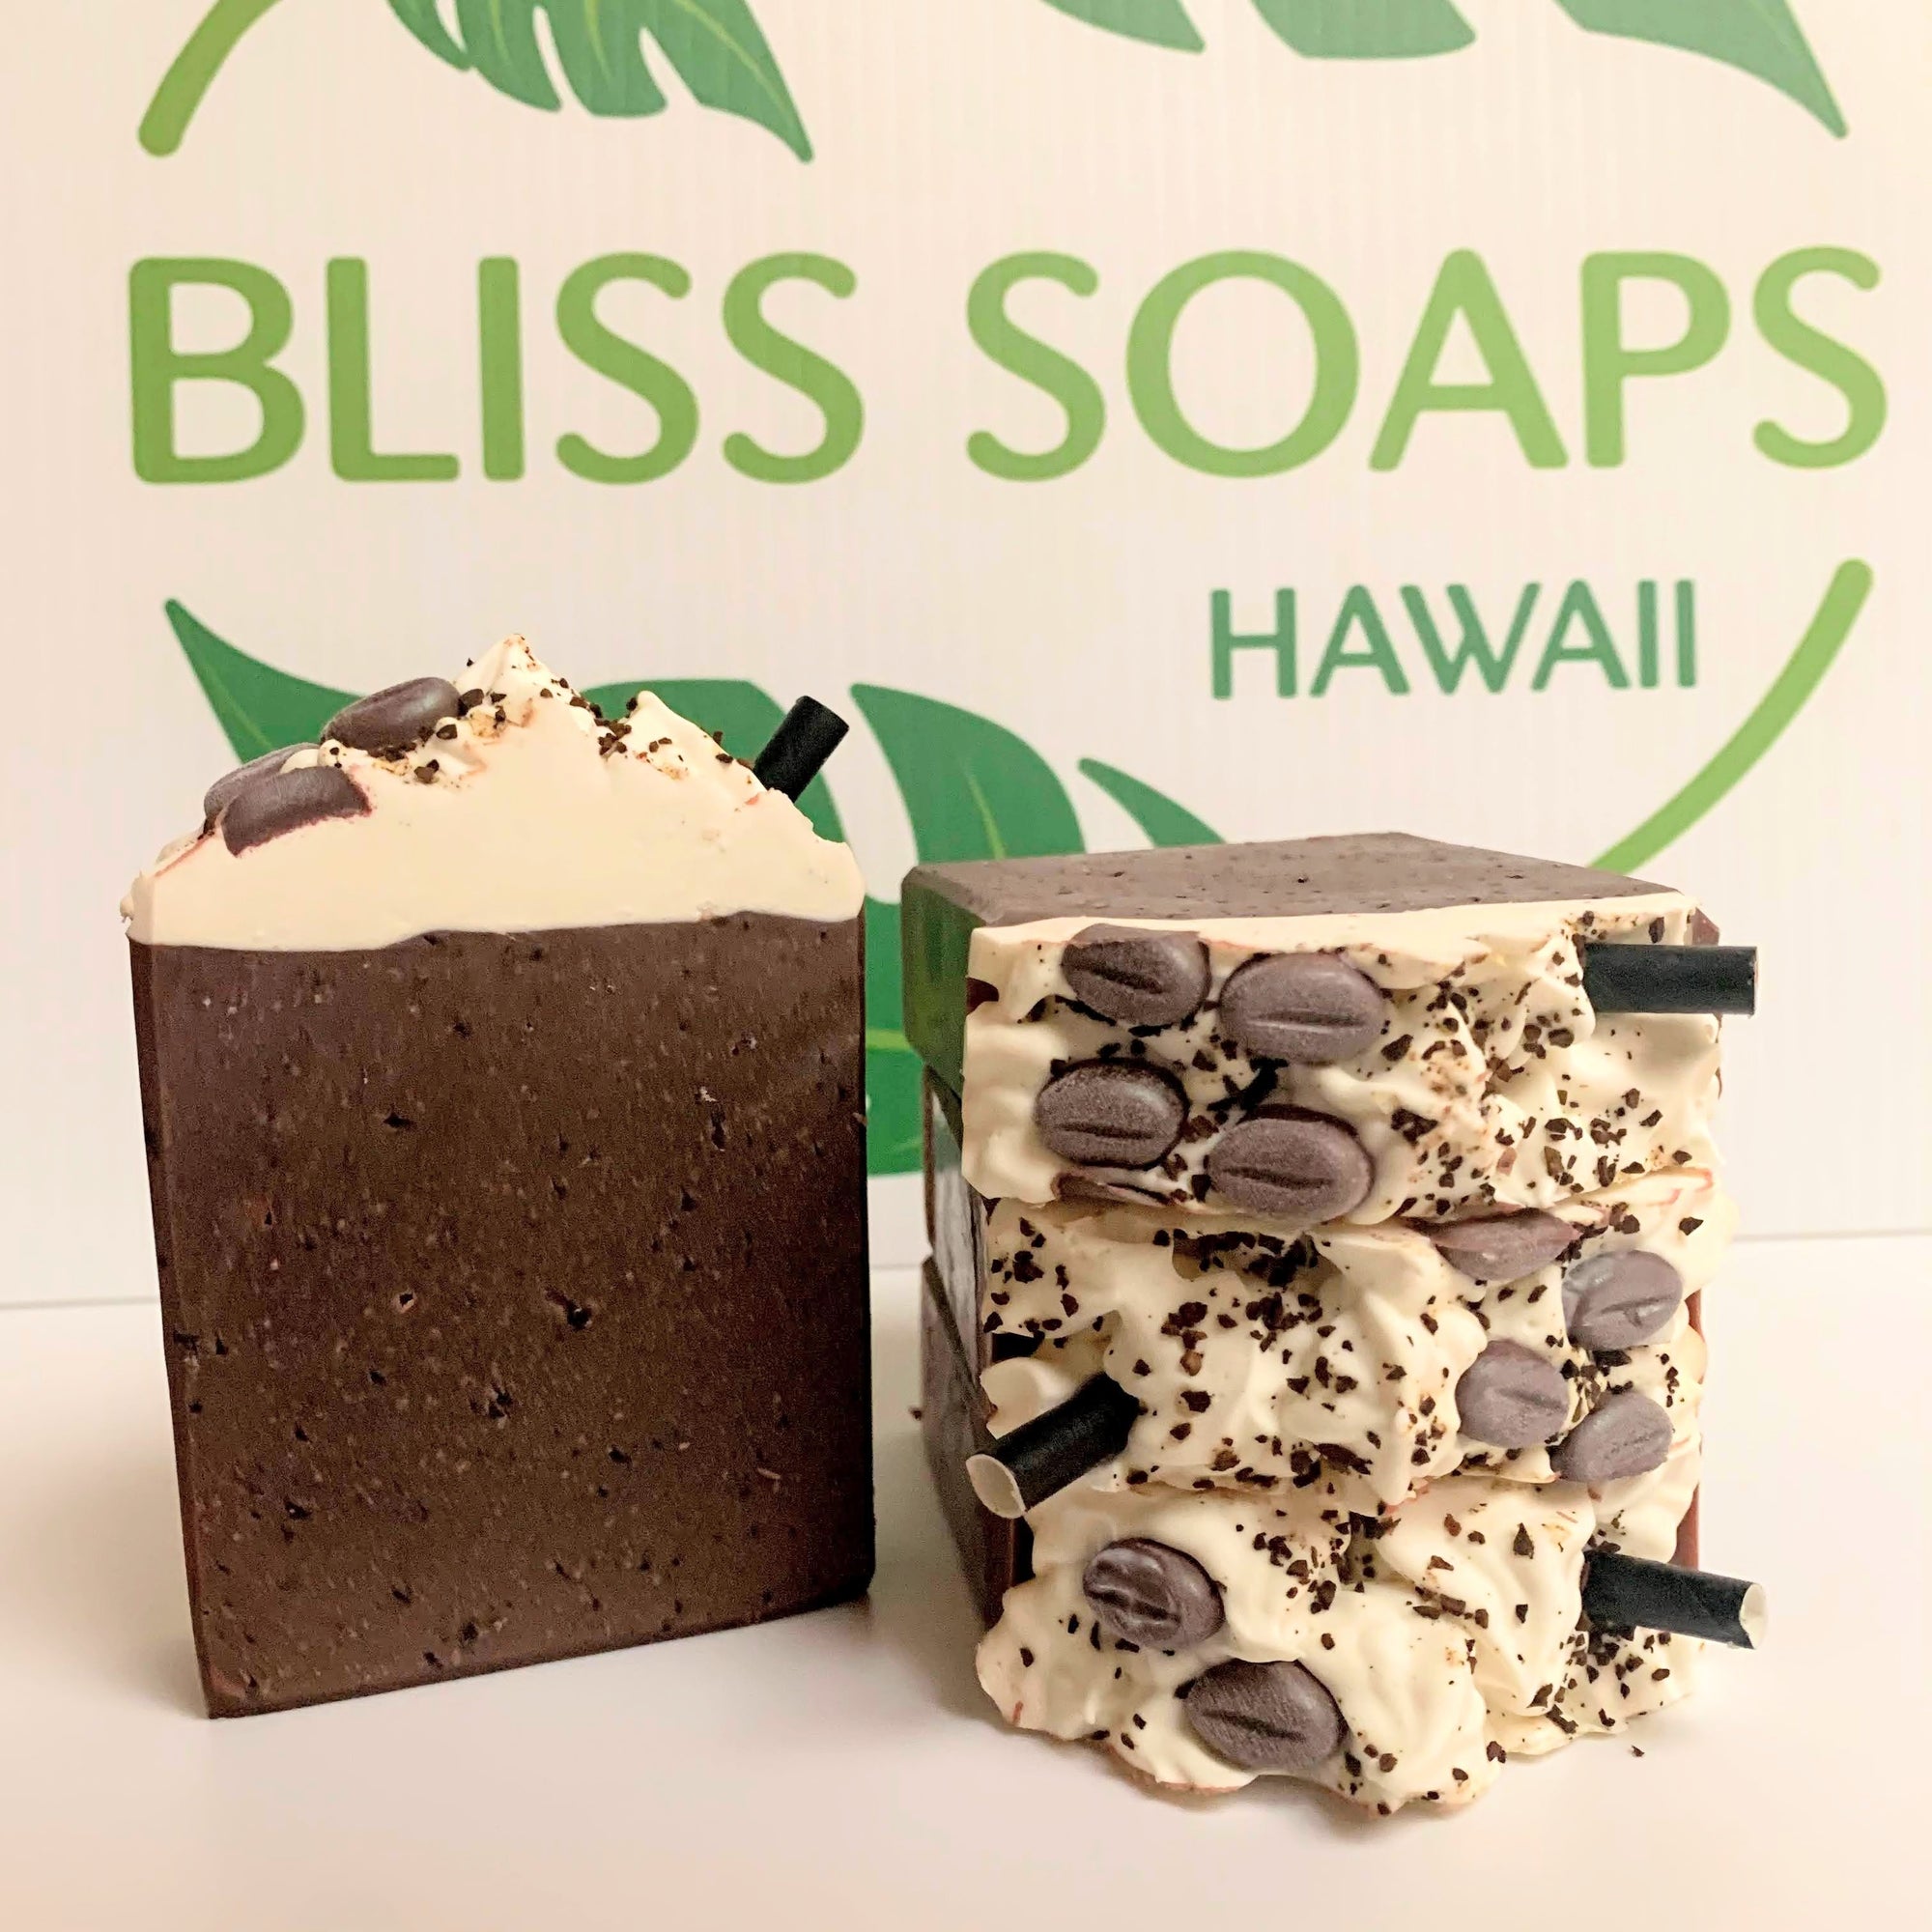 Pop-Up Mākeke - Bliss Soaps Hawaii - Kona Coffee Bath & Body Bar Soap